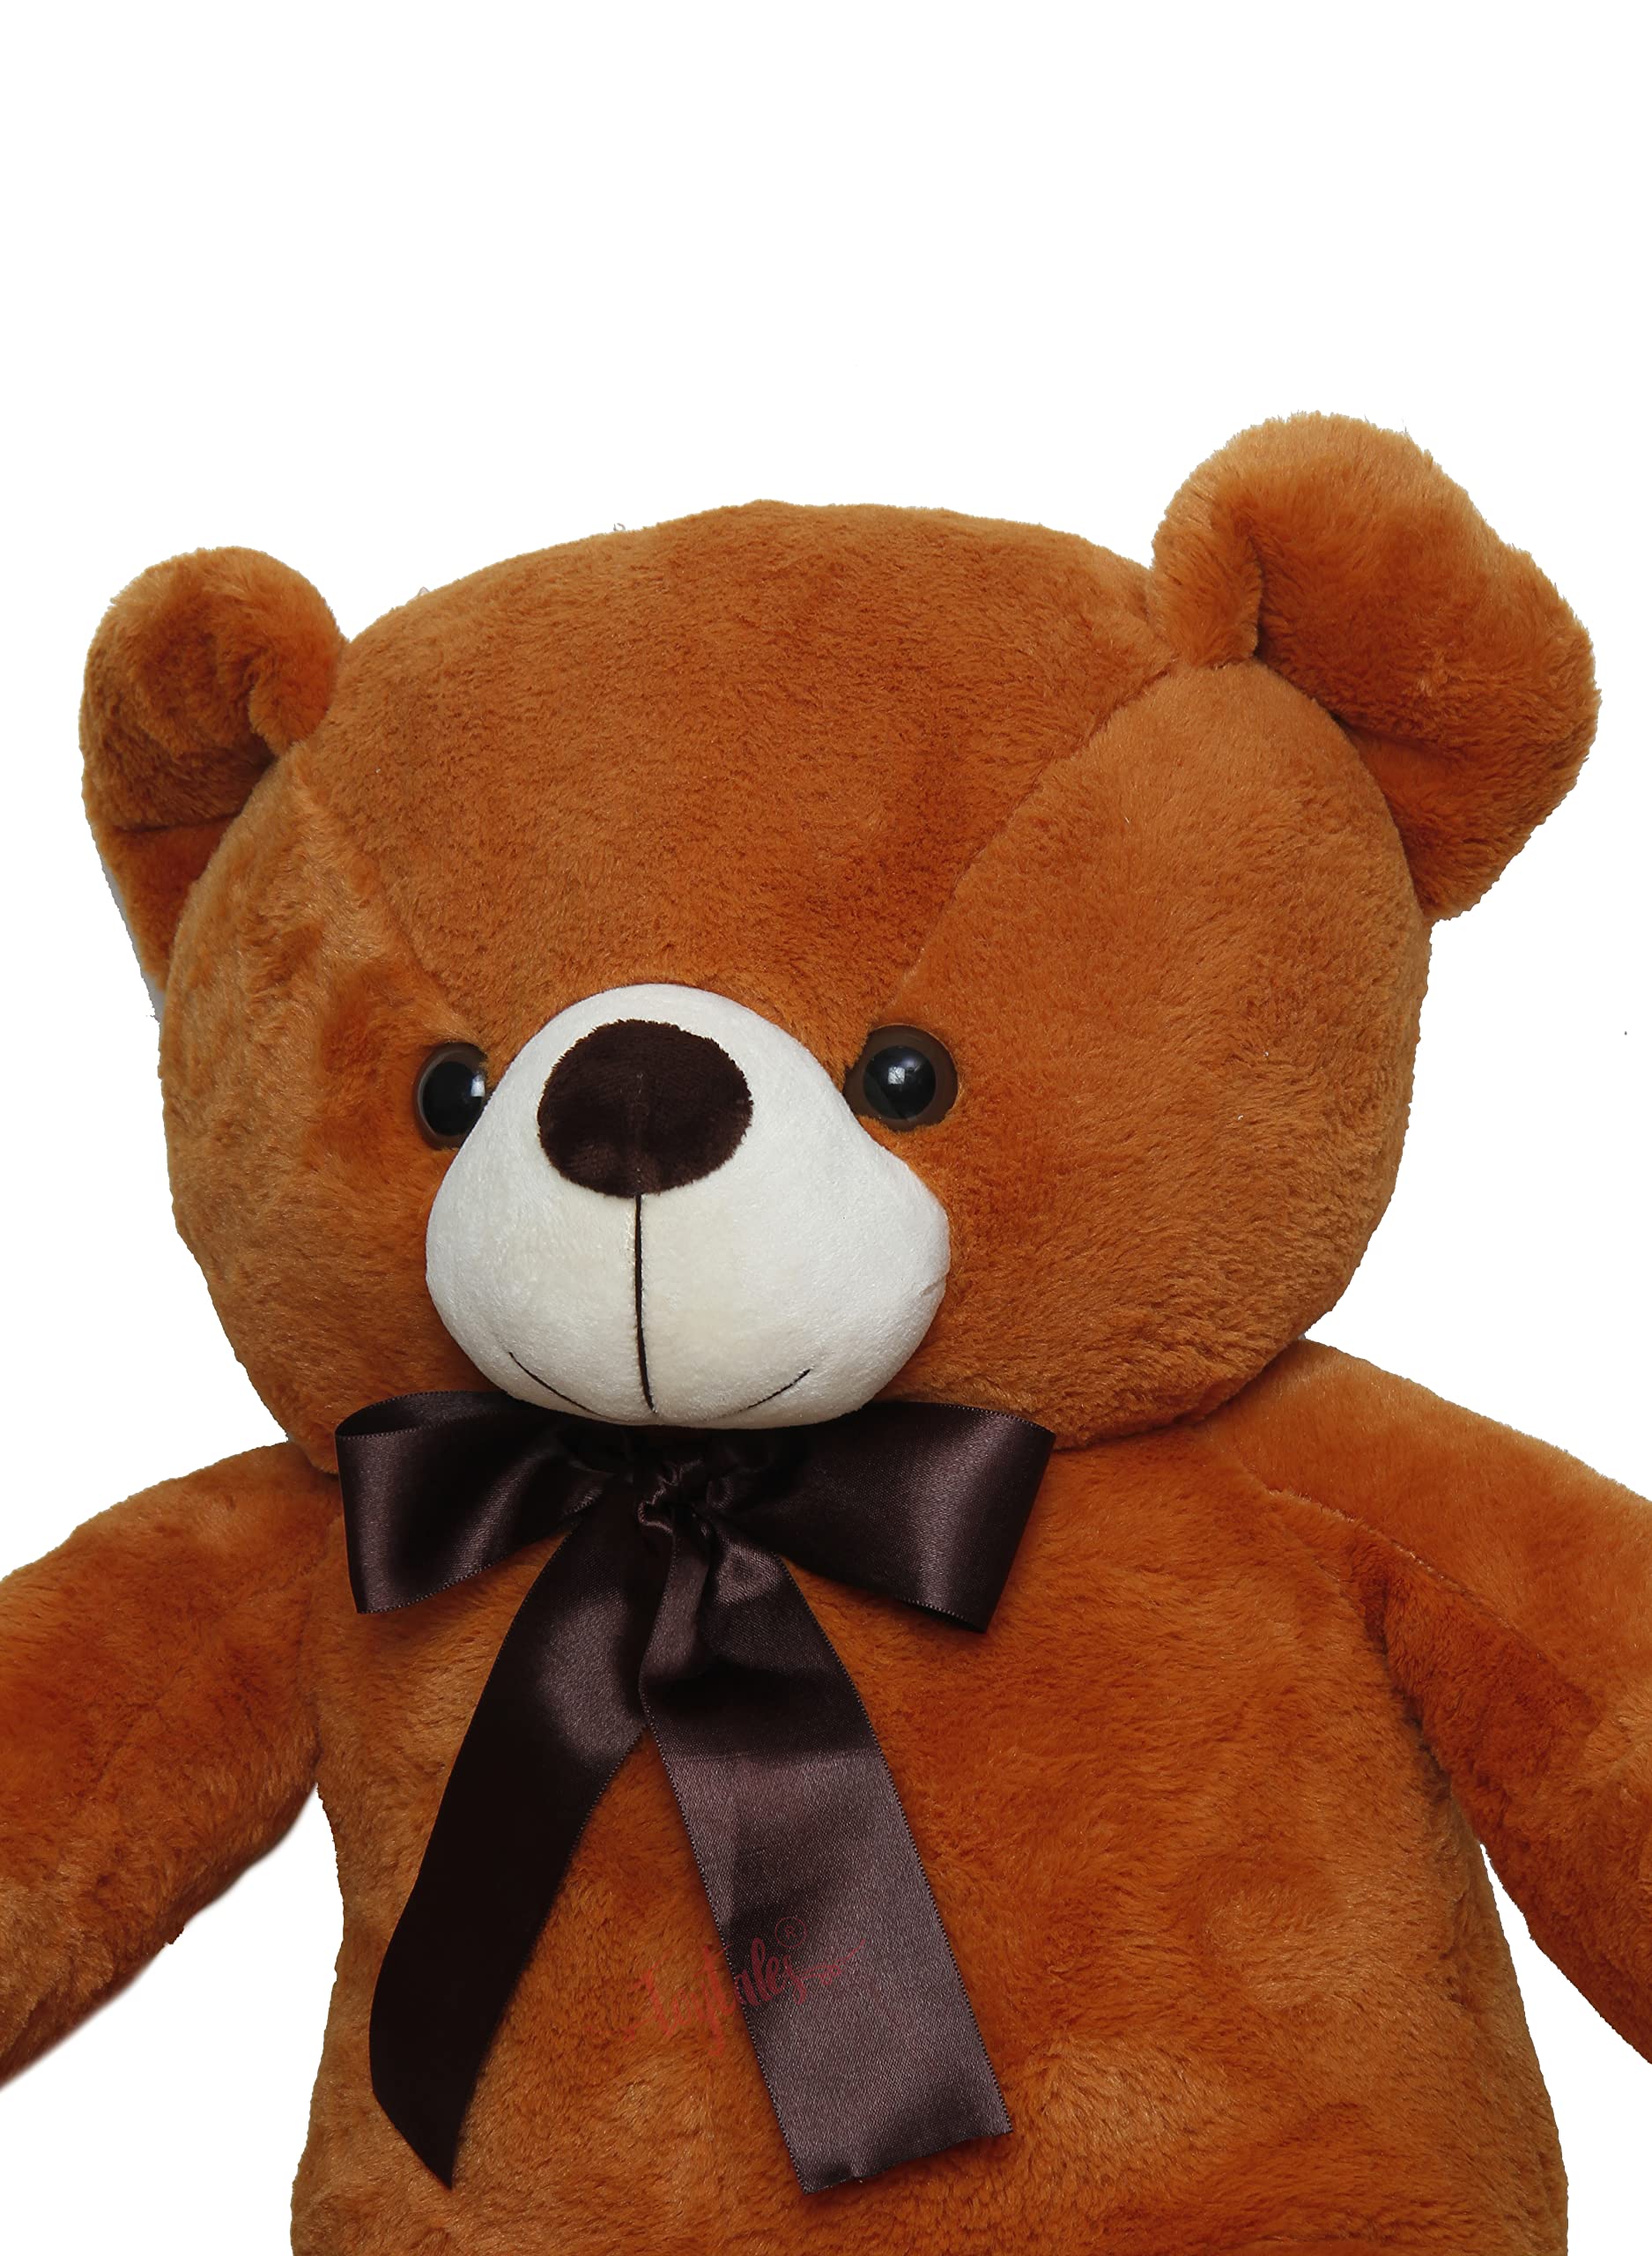 Stuffed Wolly Giant Teddy Bear (95 Cm) Cute Sitting Plush Soft Toy for Girls & Boys | Stuffed Animal Soft Toy for Kids | Cute Plush HuggableToy (Brown)